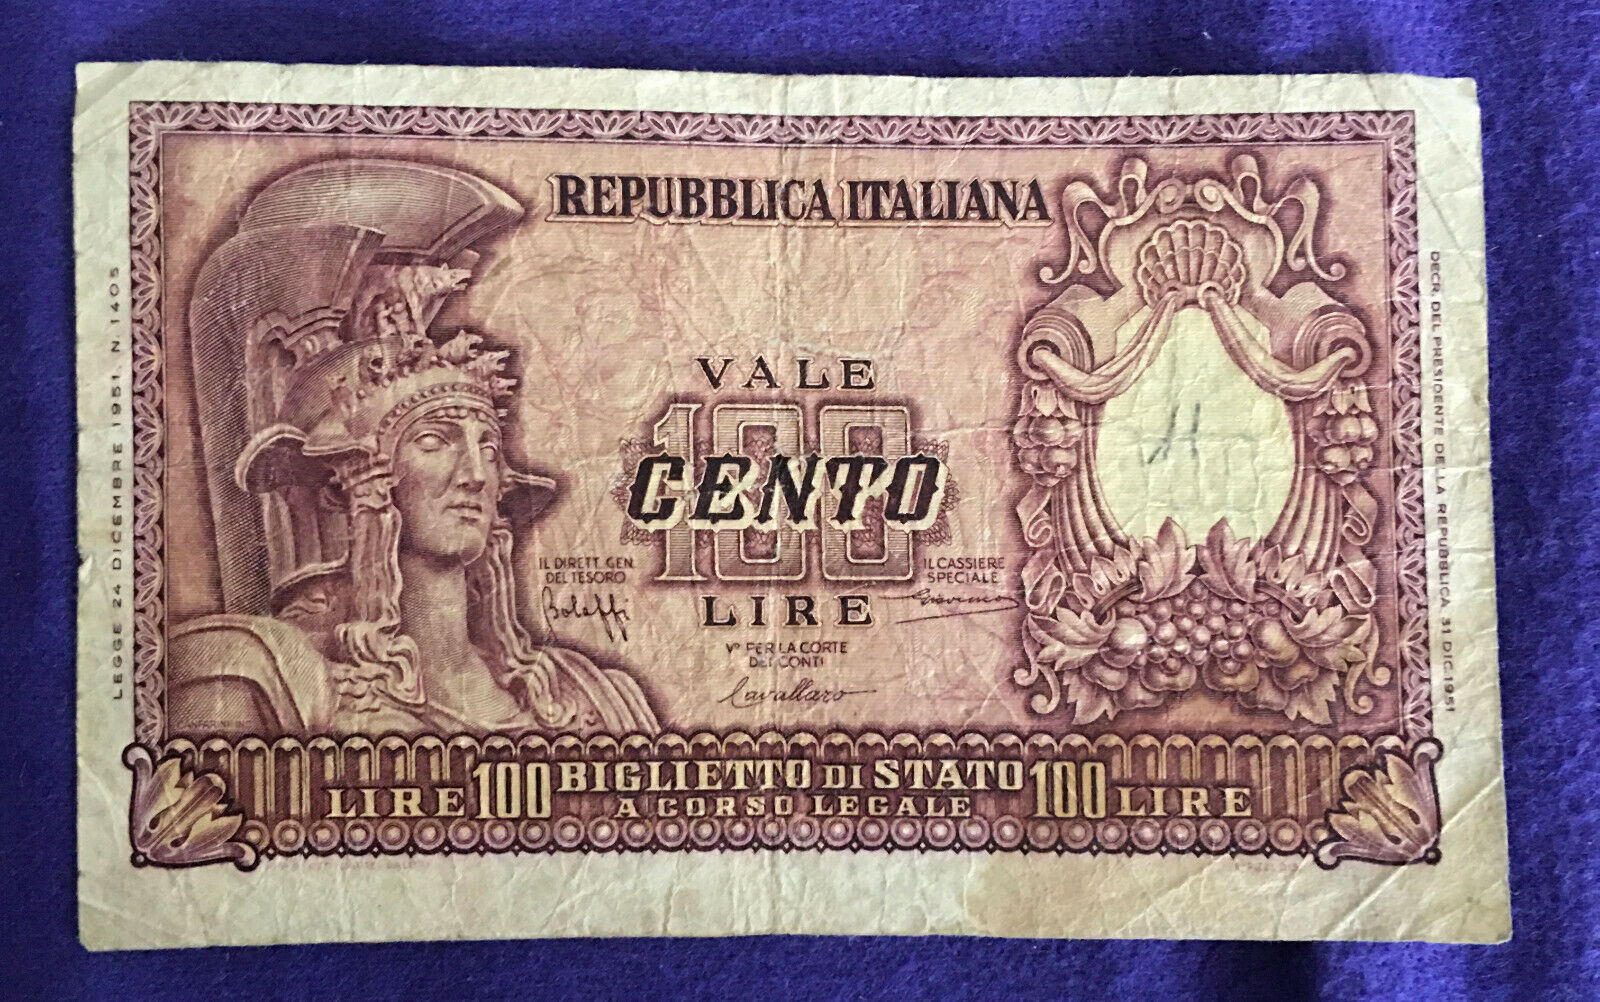 ITALY 1951 100 LIRE NOTE